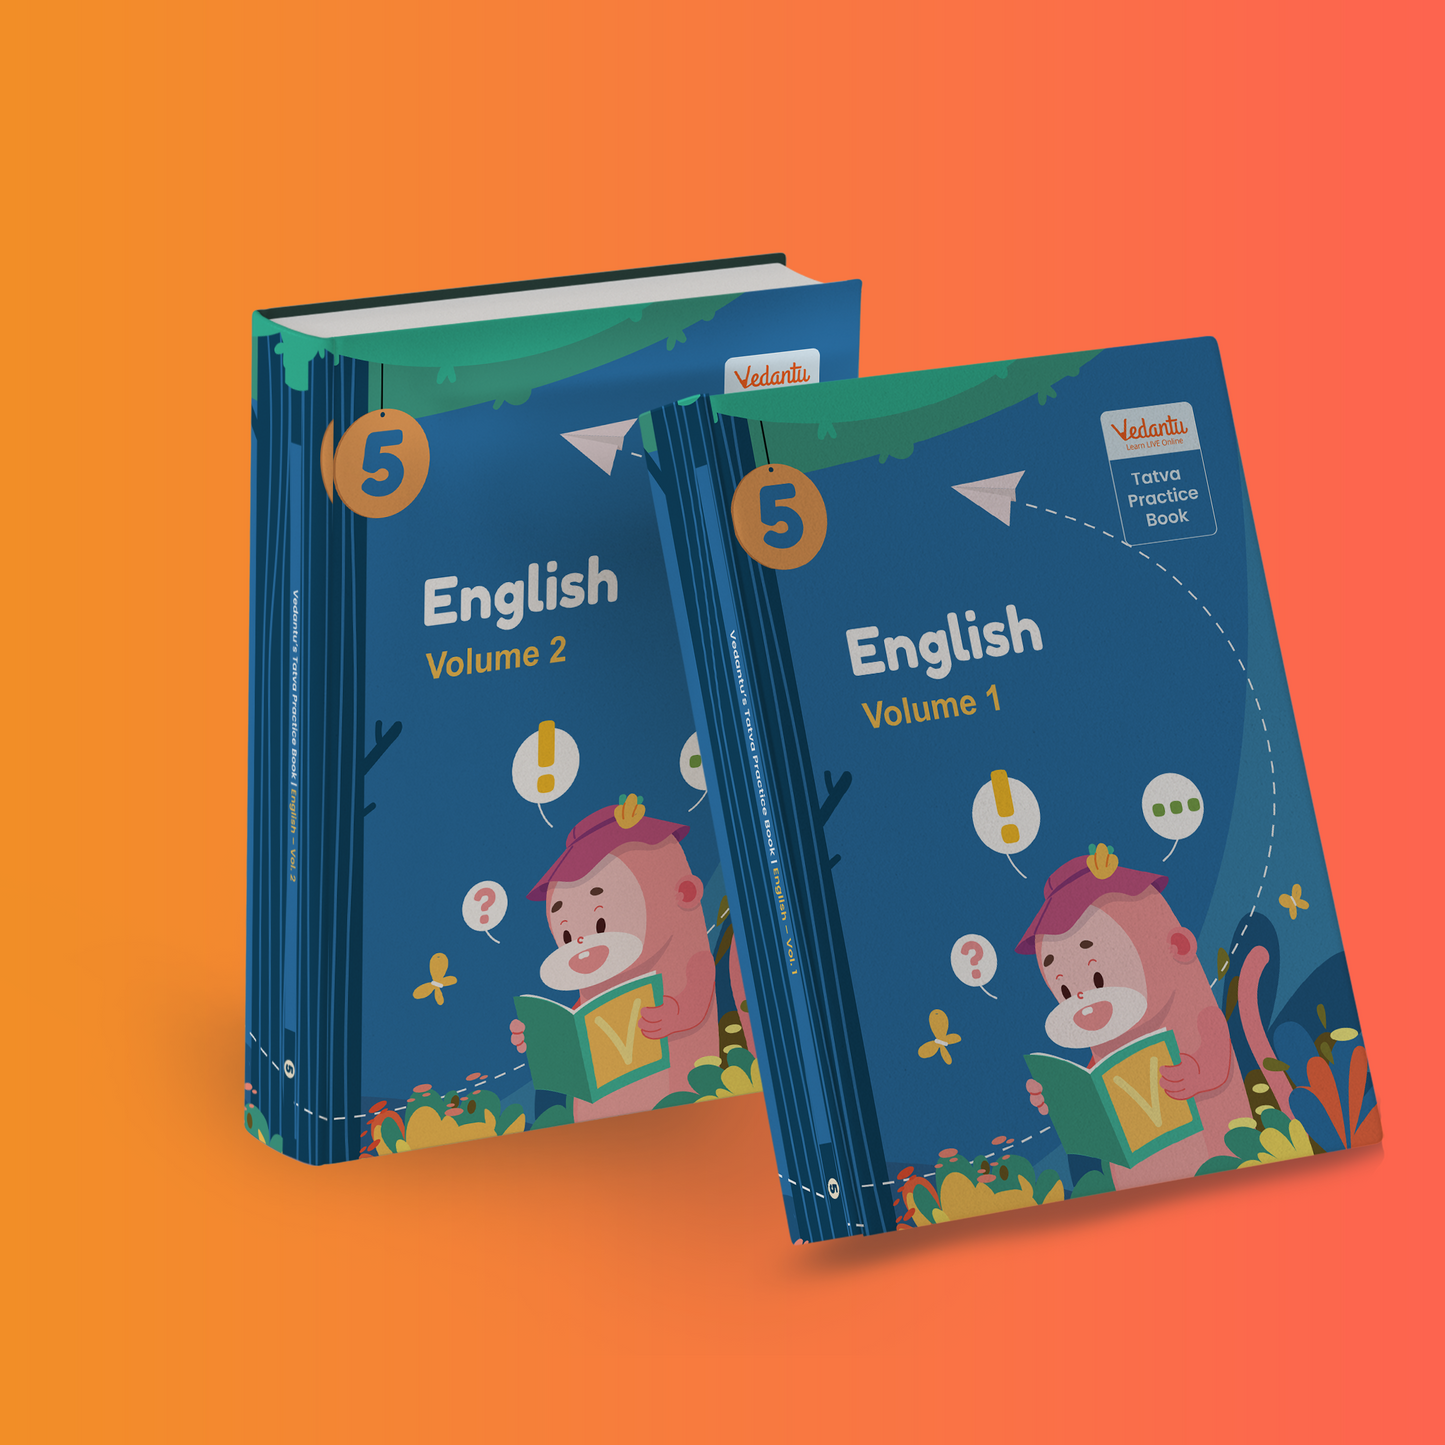 CBSE - Vedantu Tatva Practice Books - Grade 5 - English - All Volume (Set of 2 Books)